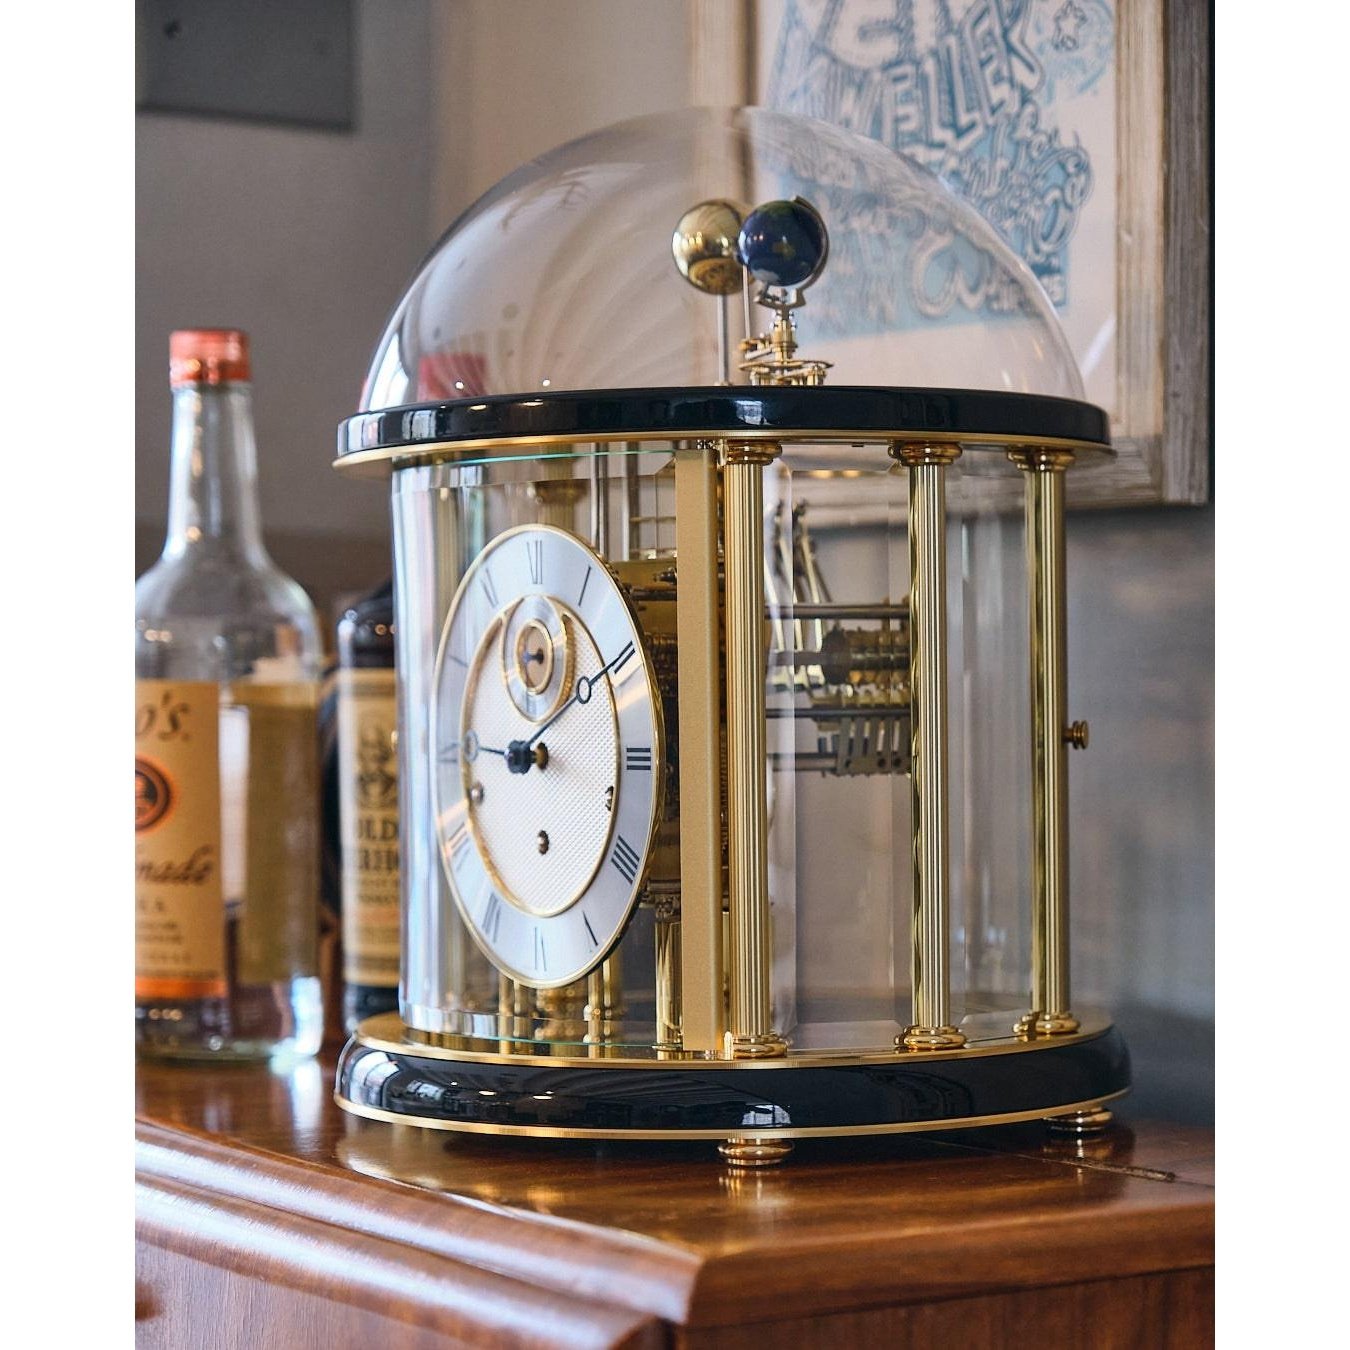 Hermle TELLURIUM - Mantel Clock - Grandfather Clocks